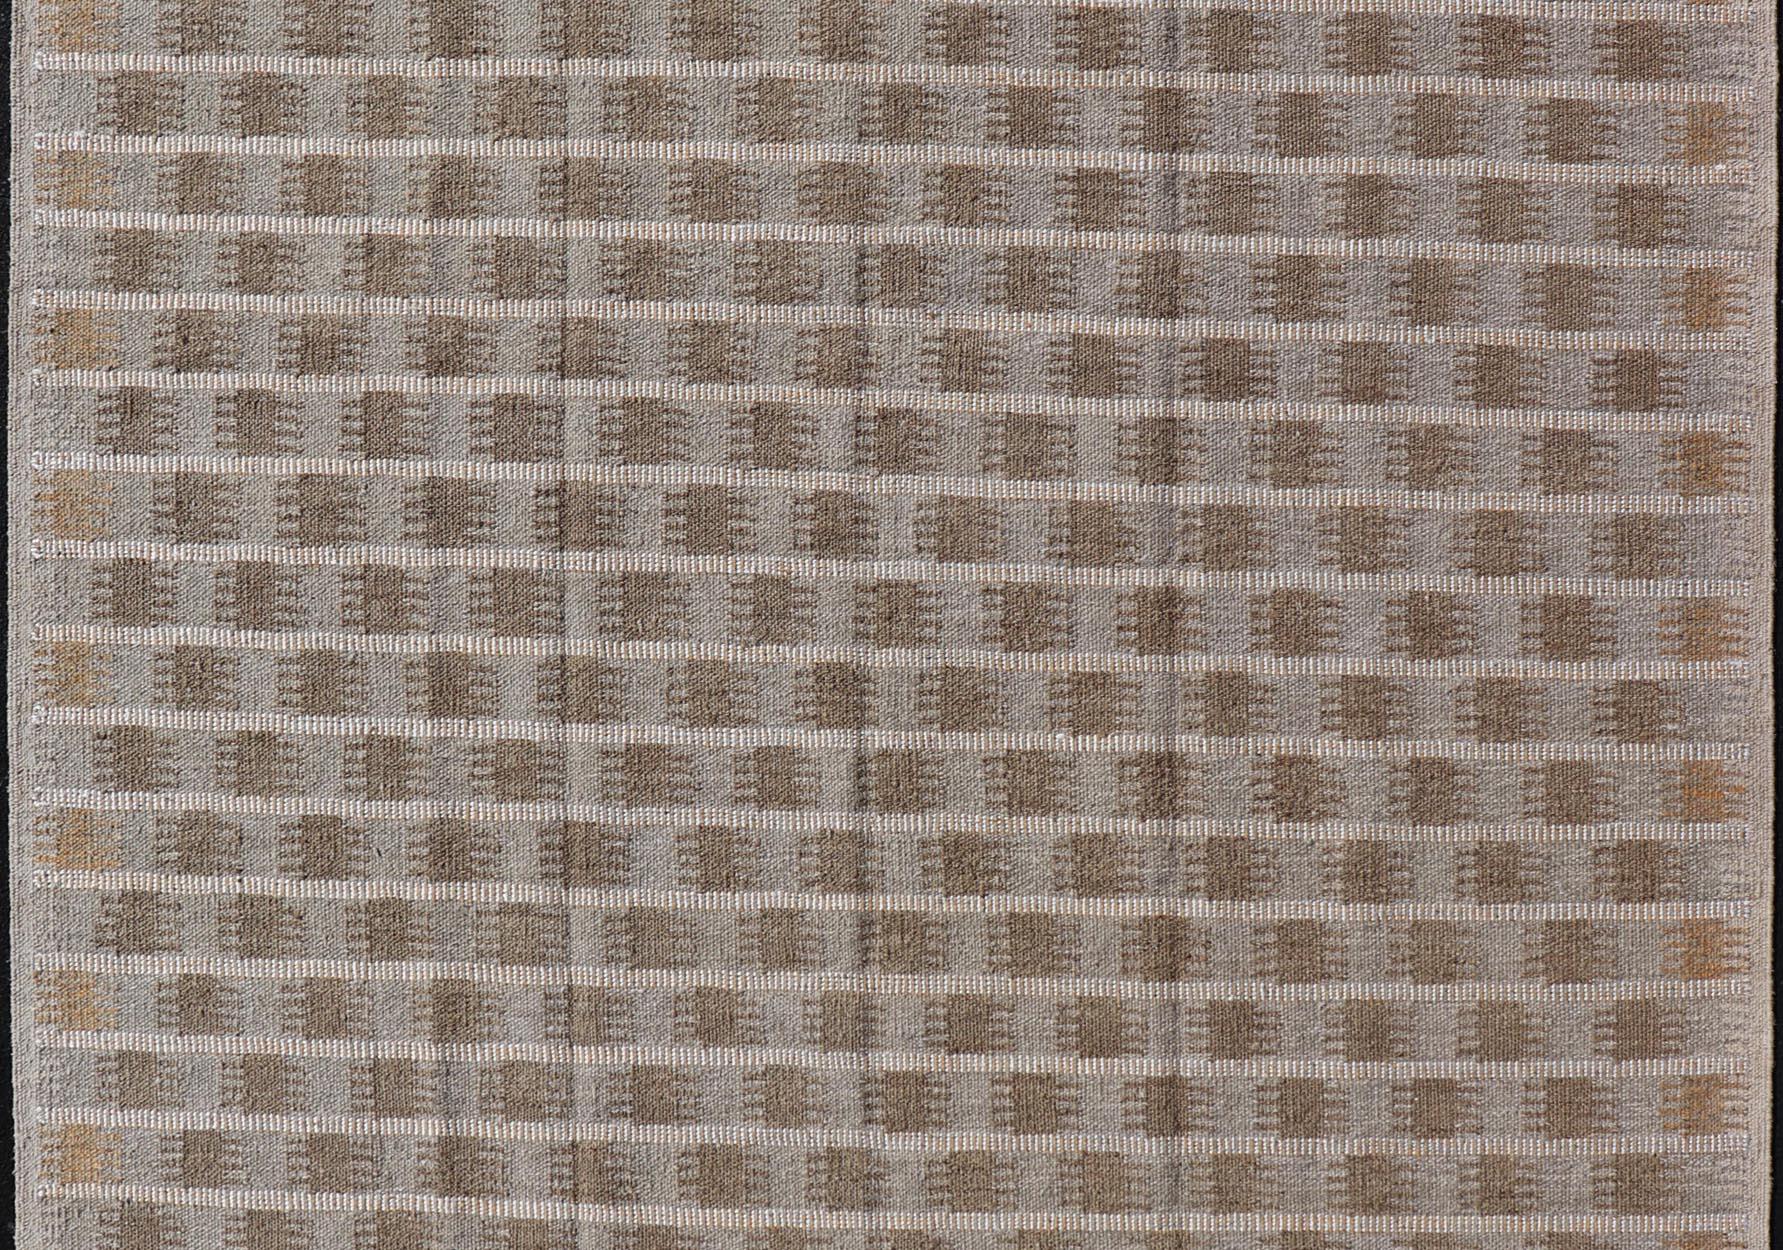 Hand-Knotted Modern Scandinavian/Swedish Flat Weave Geometric Design Rug in Earth Tones For Sale